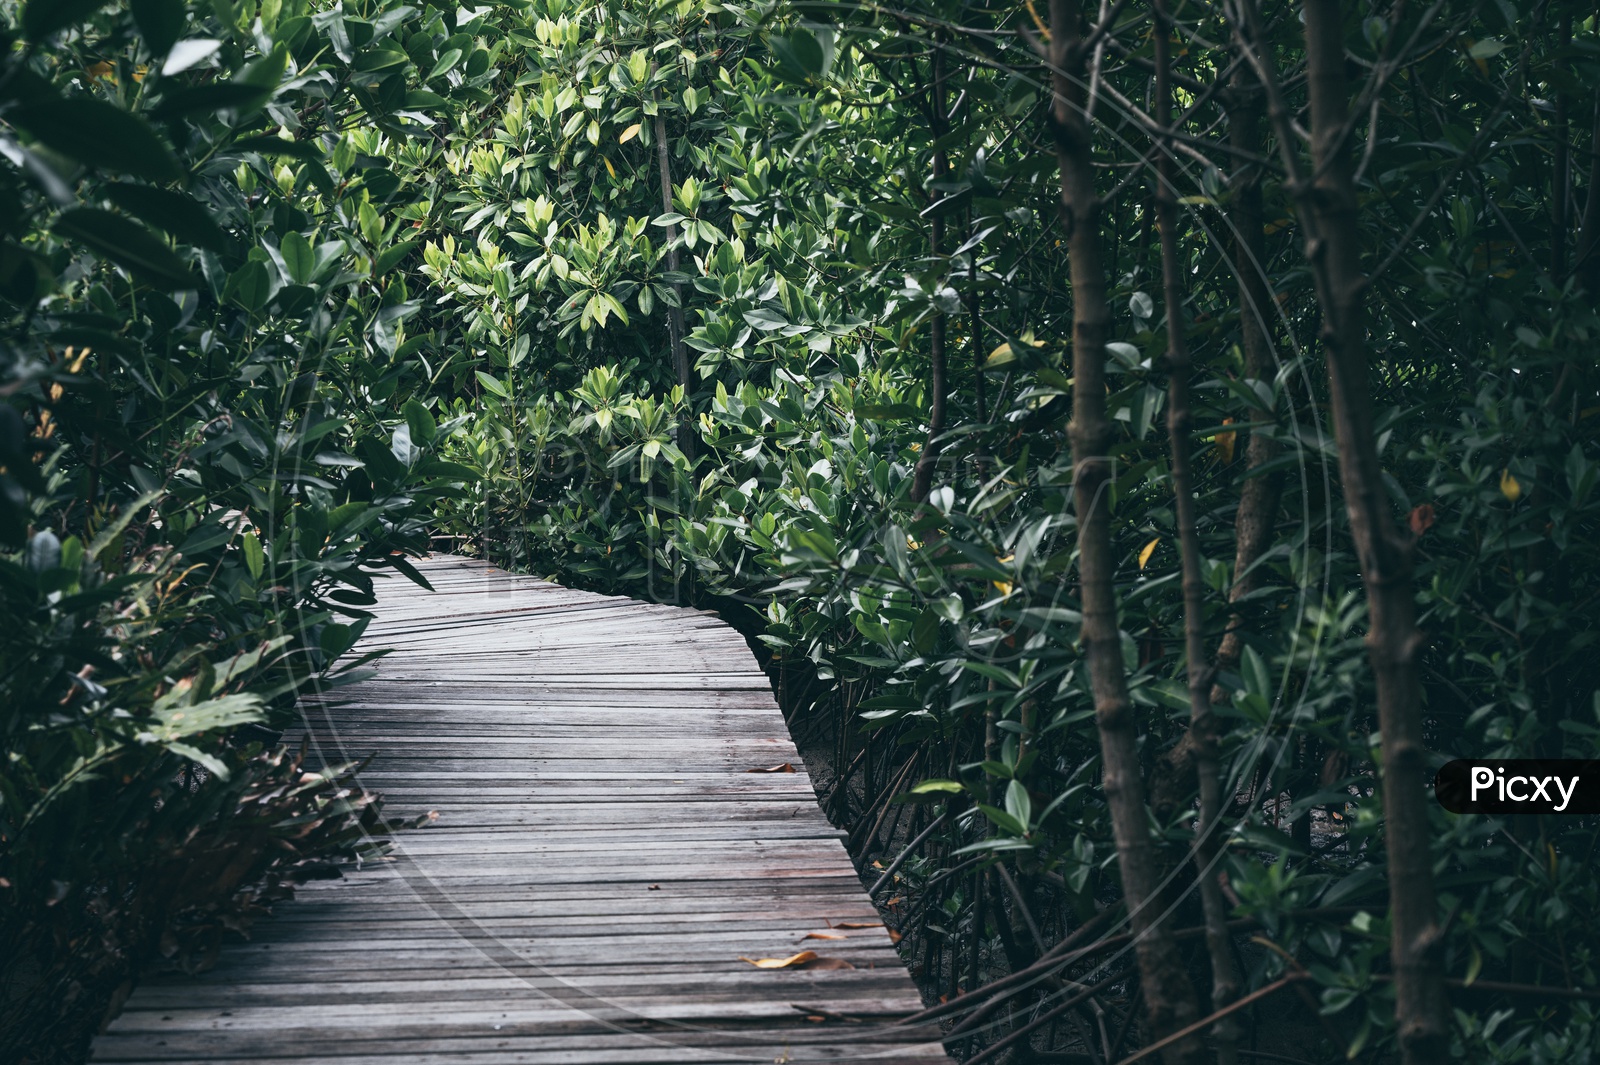 A Wooden boardwalk in Thailand mangroves